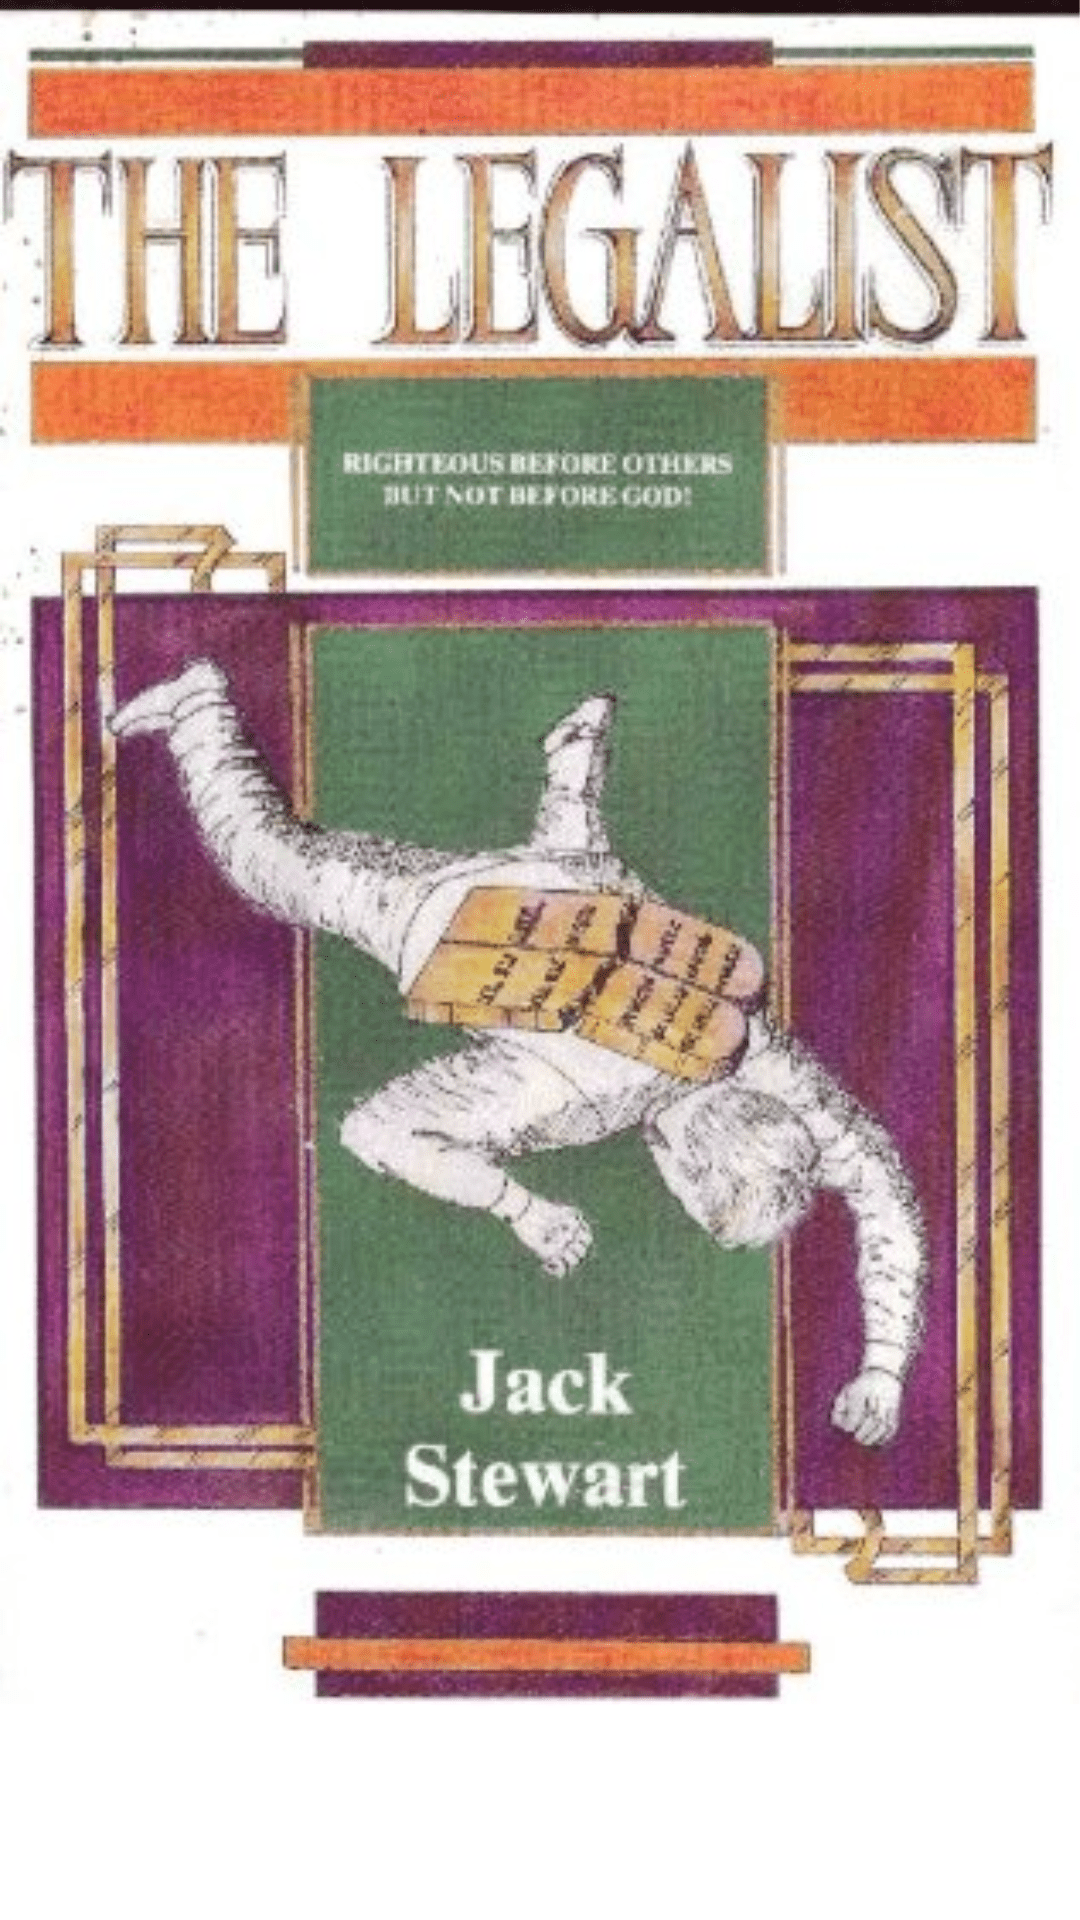 The legalist by Jack Stewart